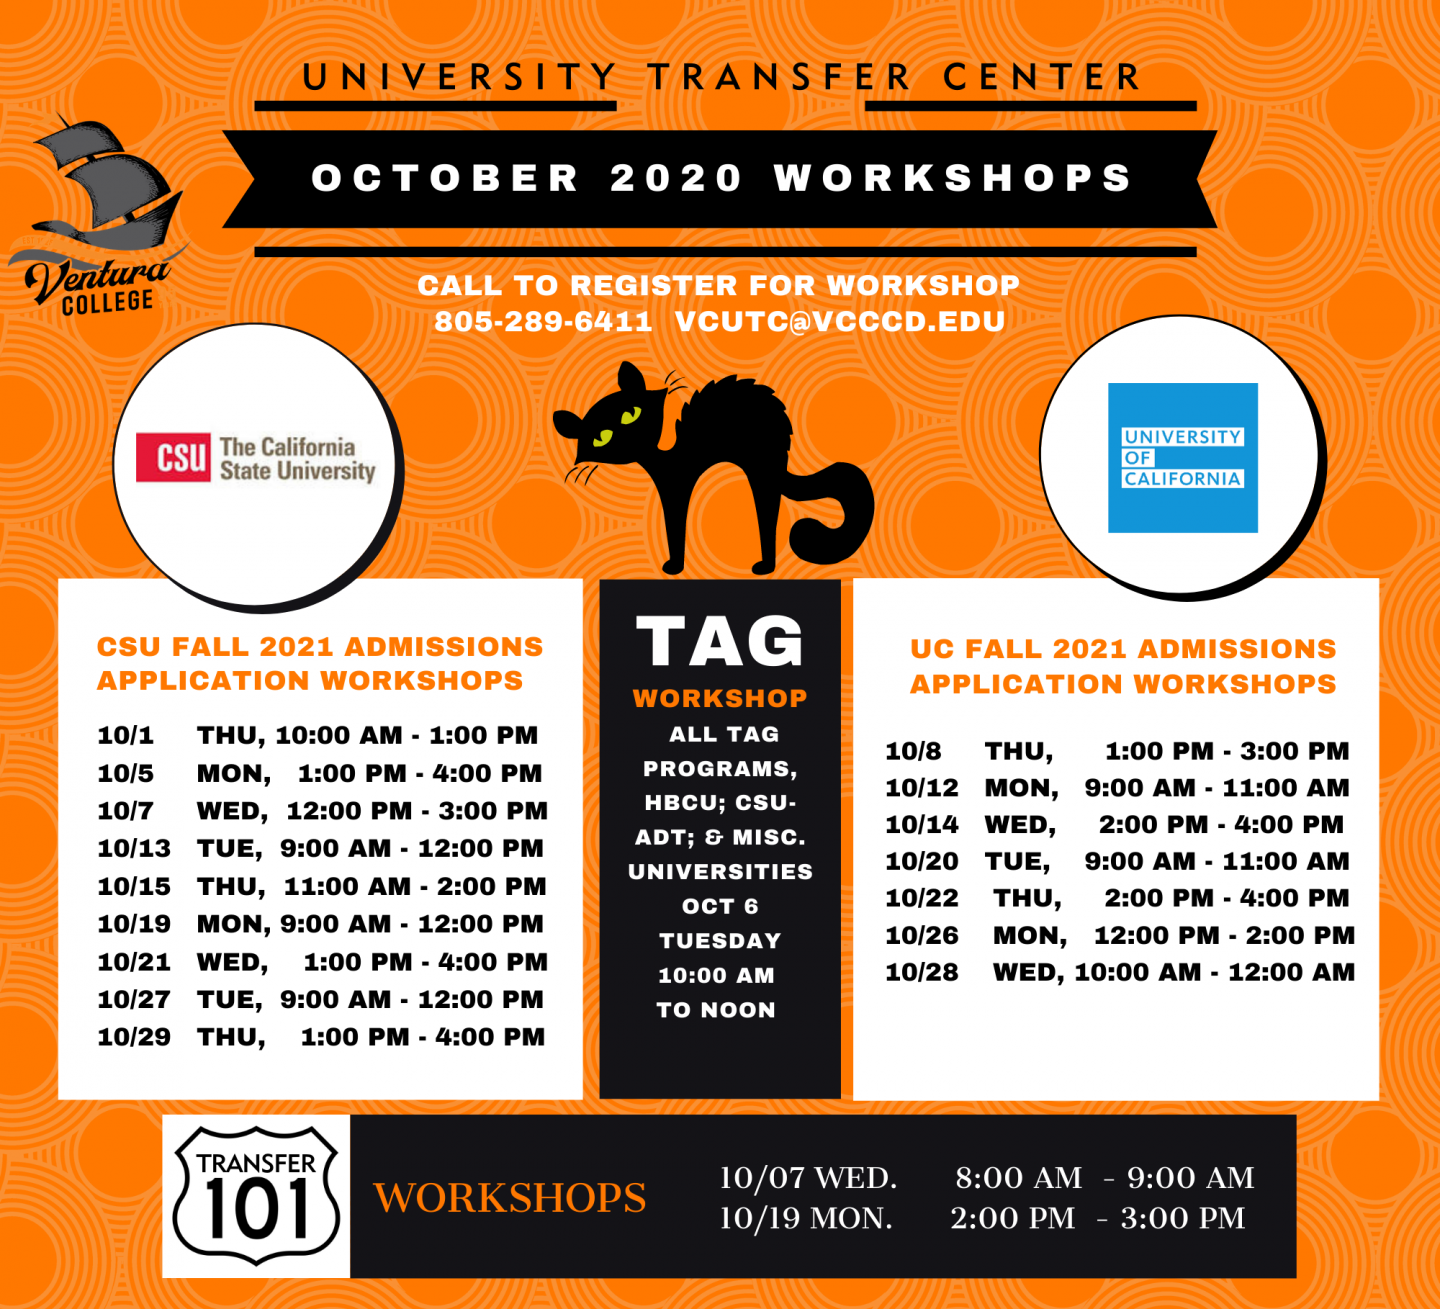 University Transfer Center October 2020 Workshops. Schedule and details listed below.